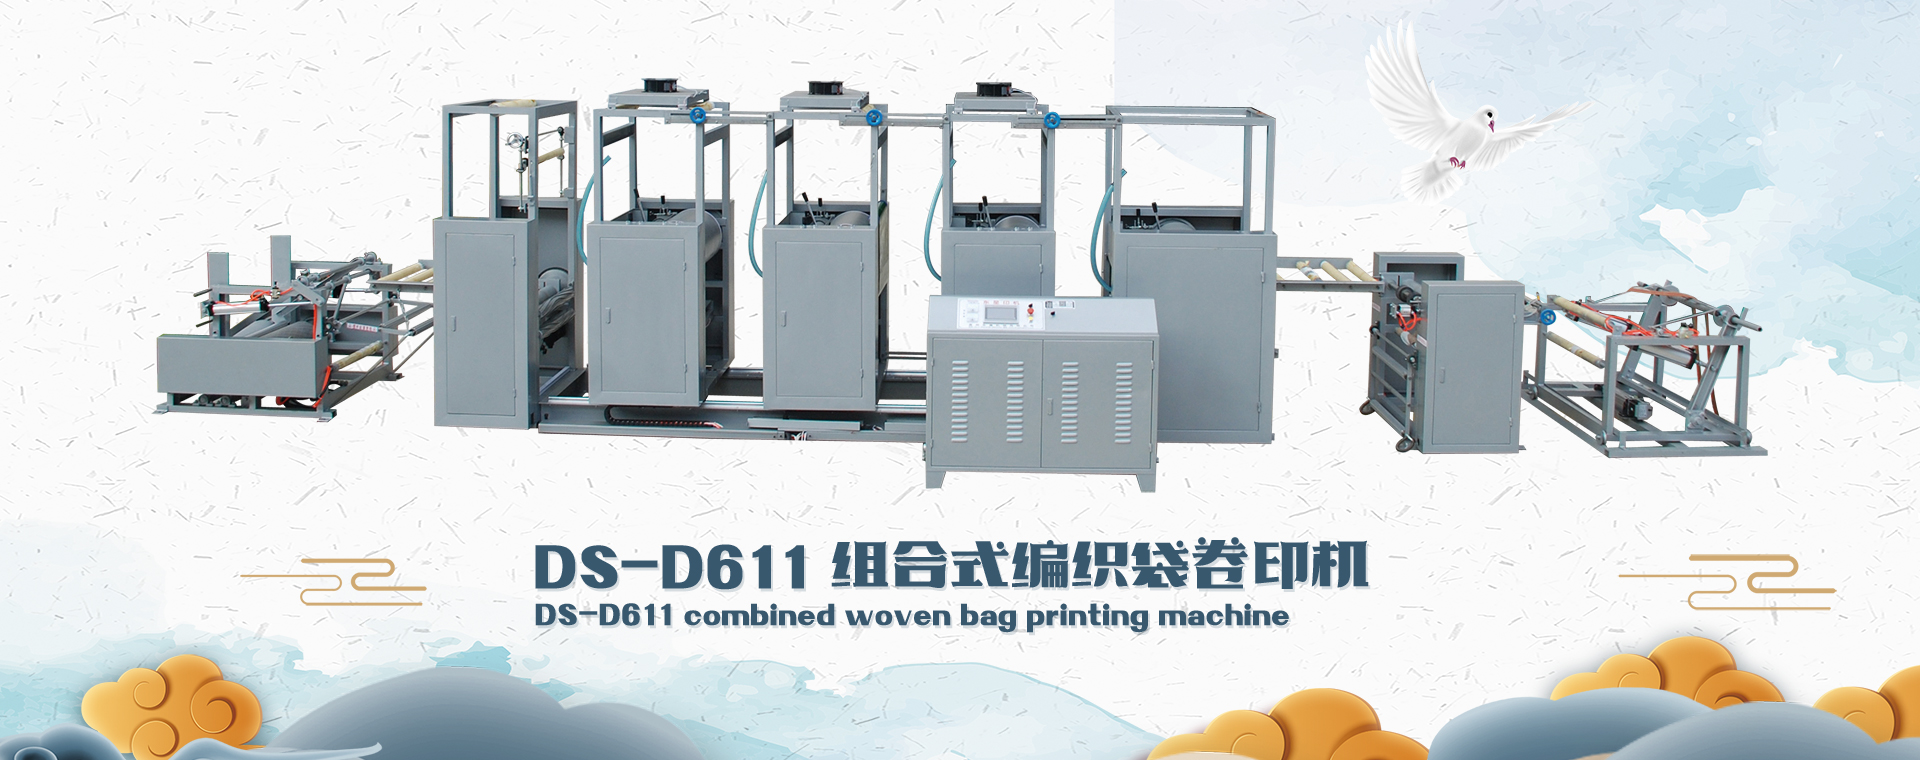 DS-D611 组合式编织袋卷印机